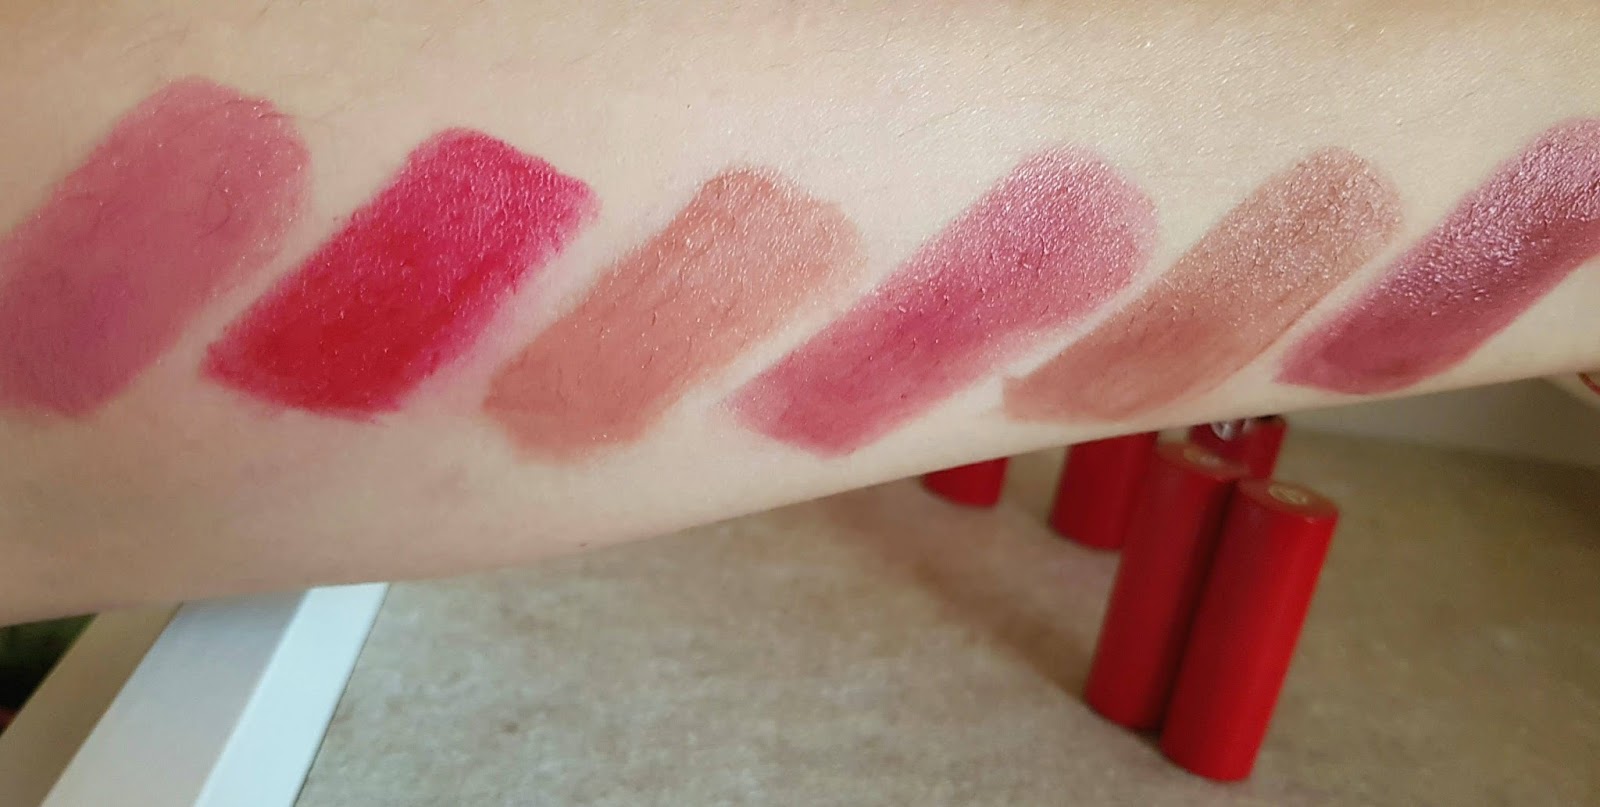 armani 101 lipstick